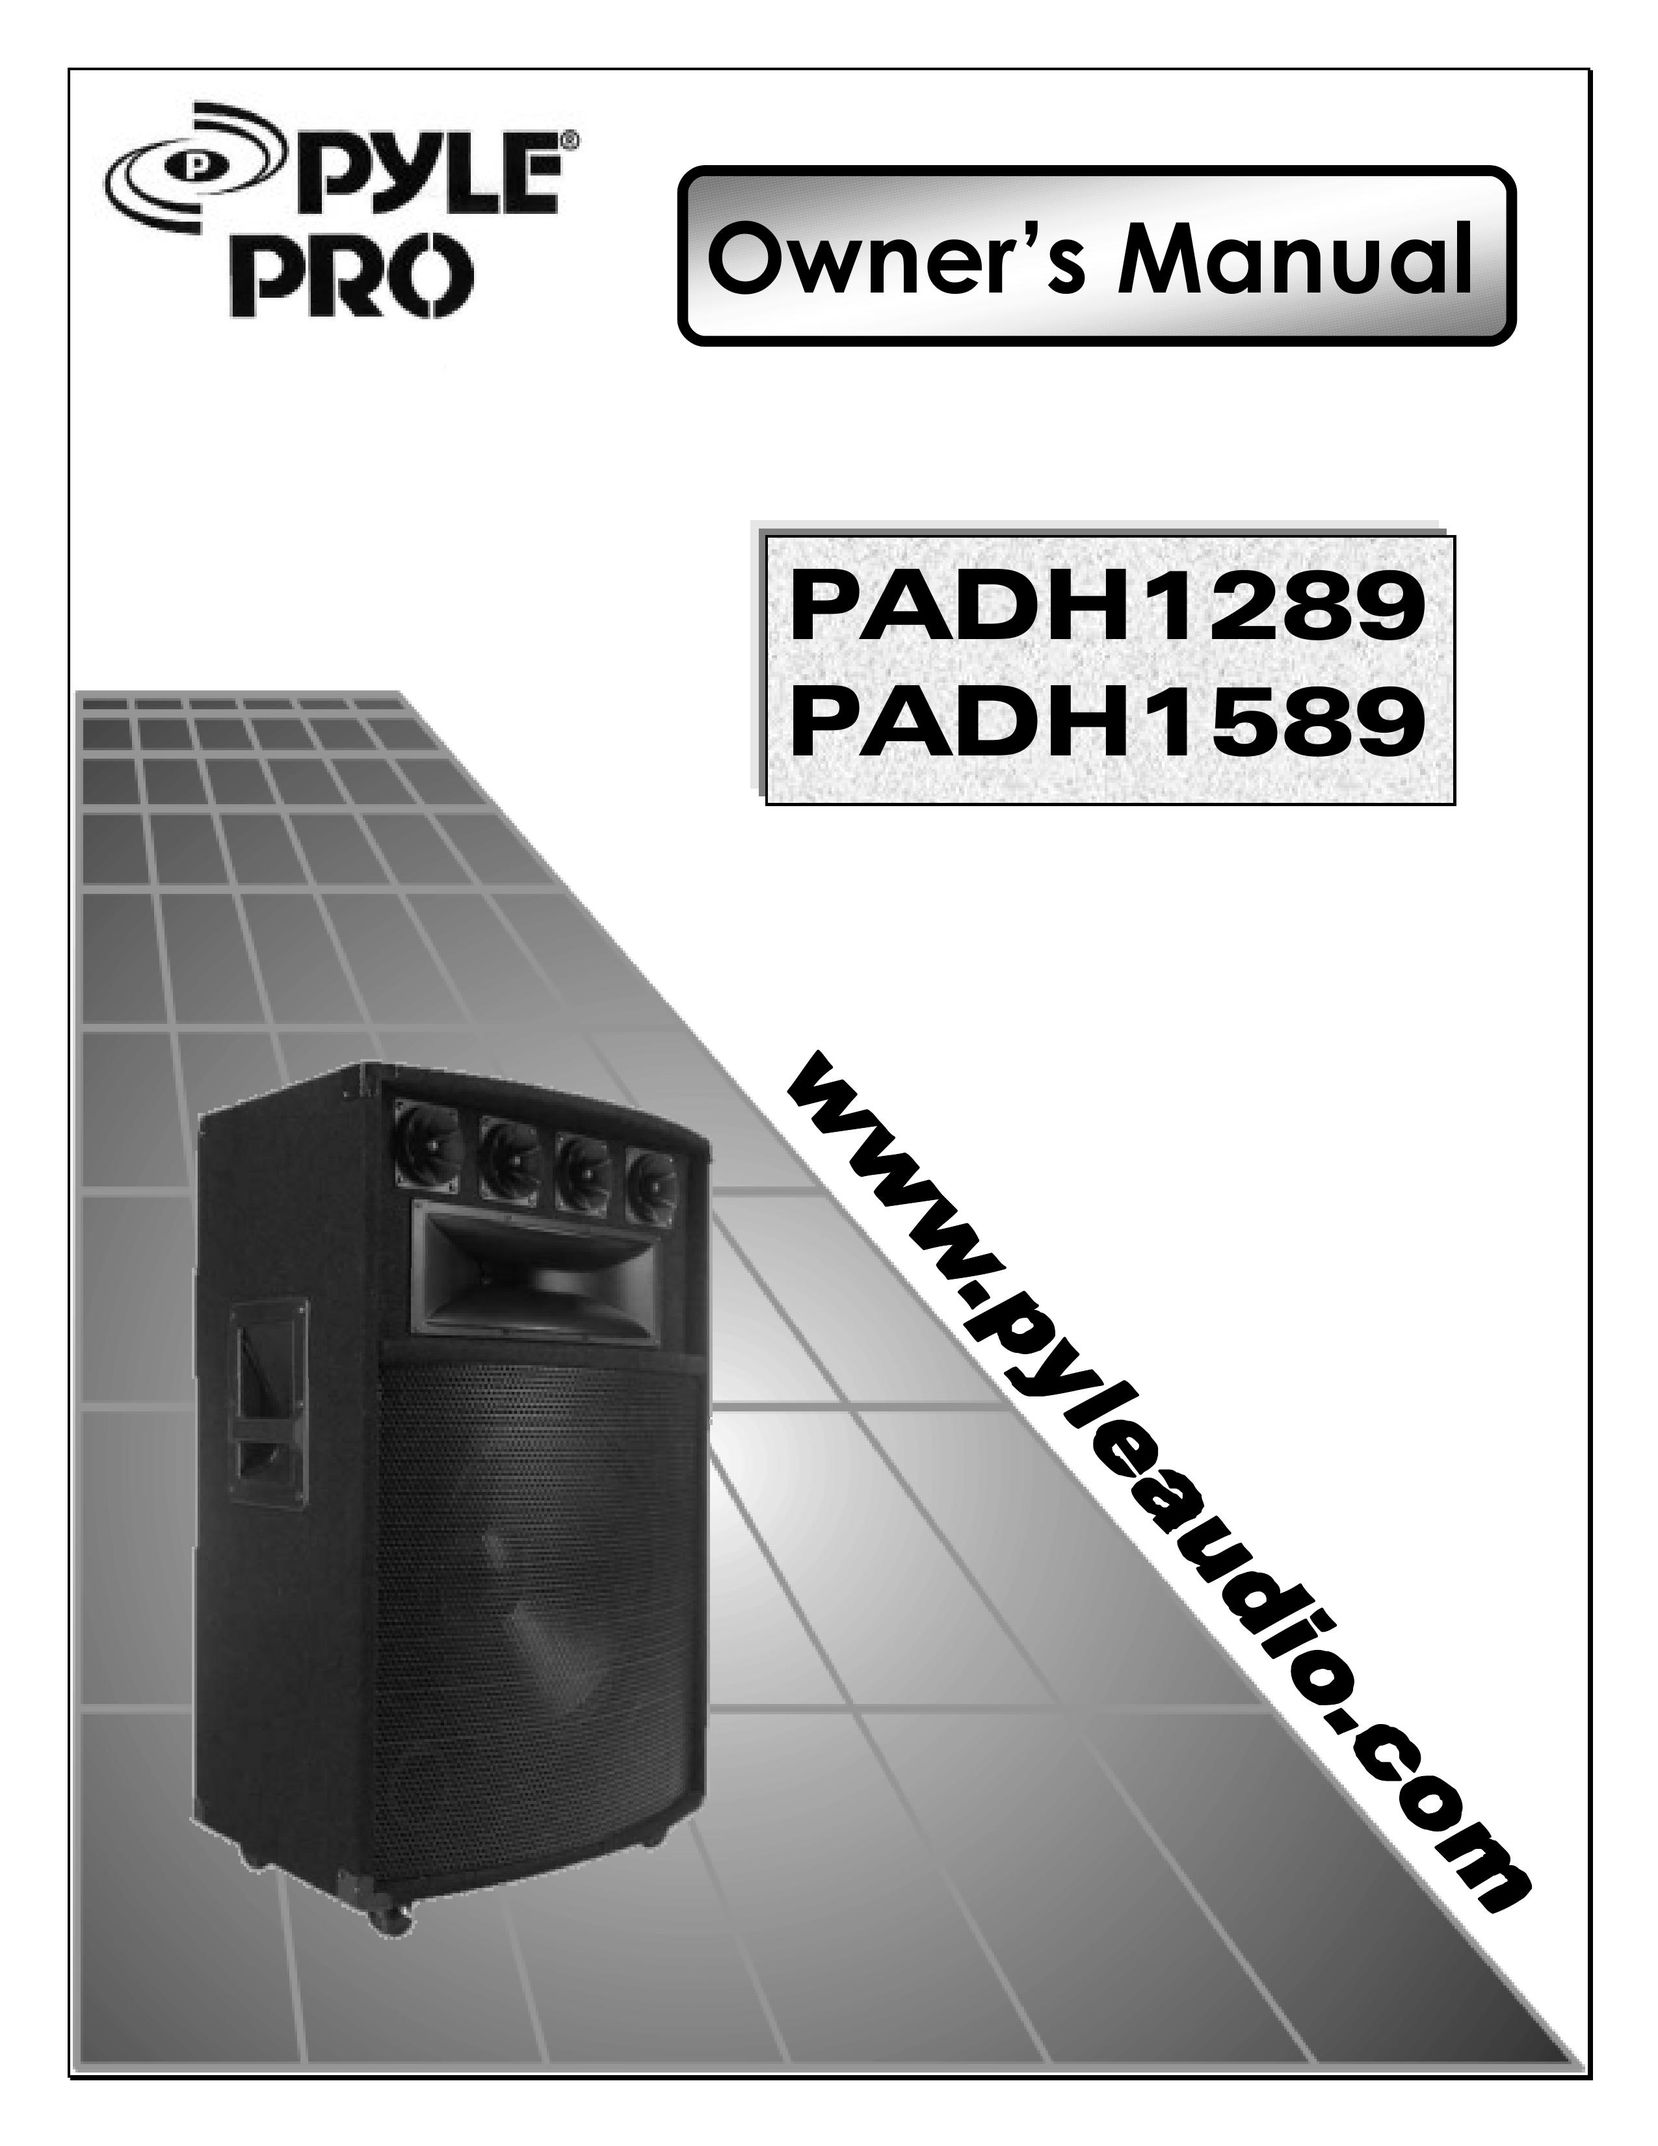 PYLE Audio PADH1289 Speaker User Manual